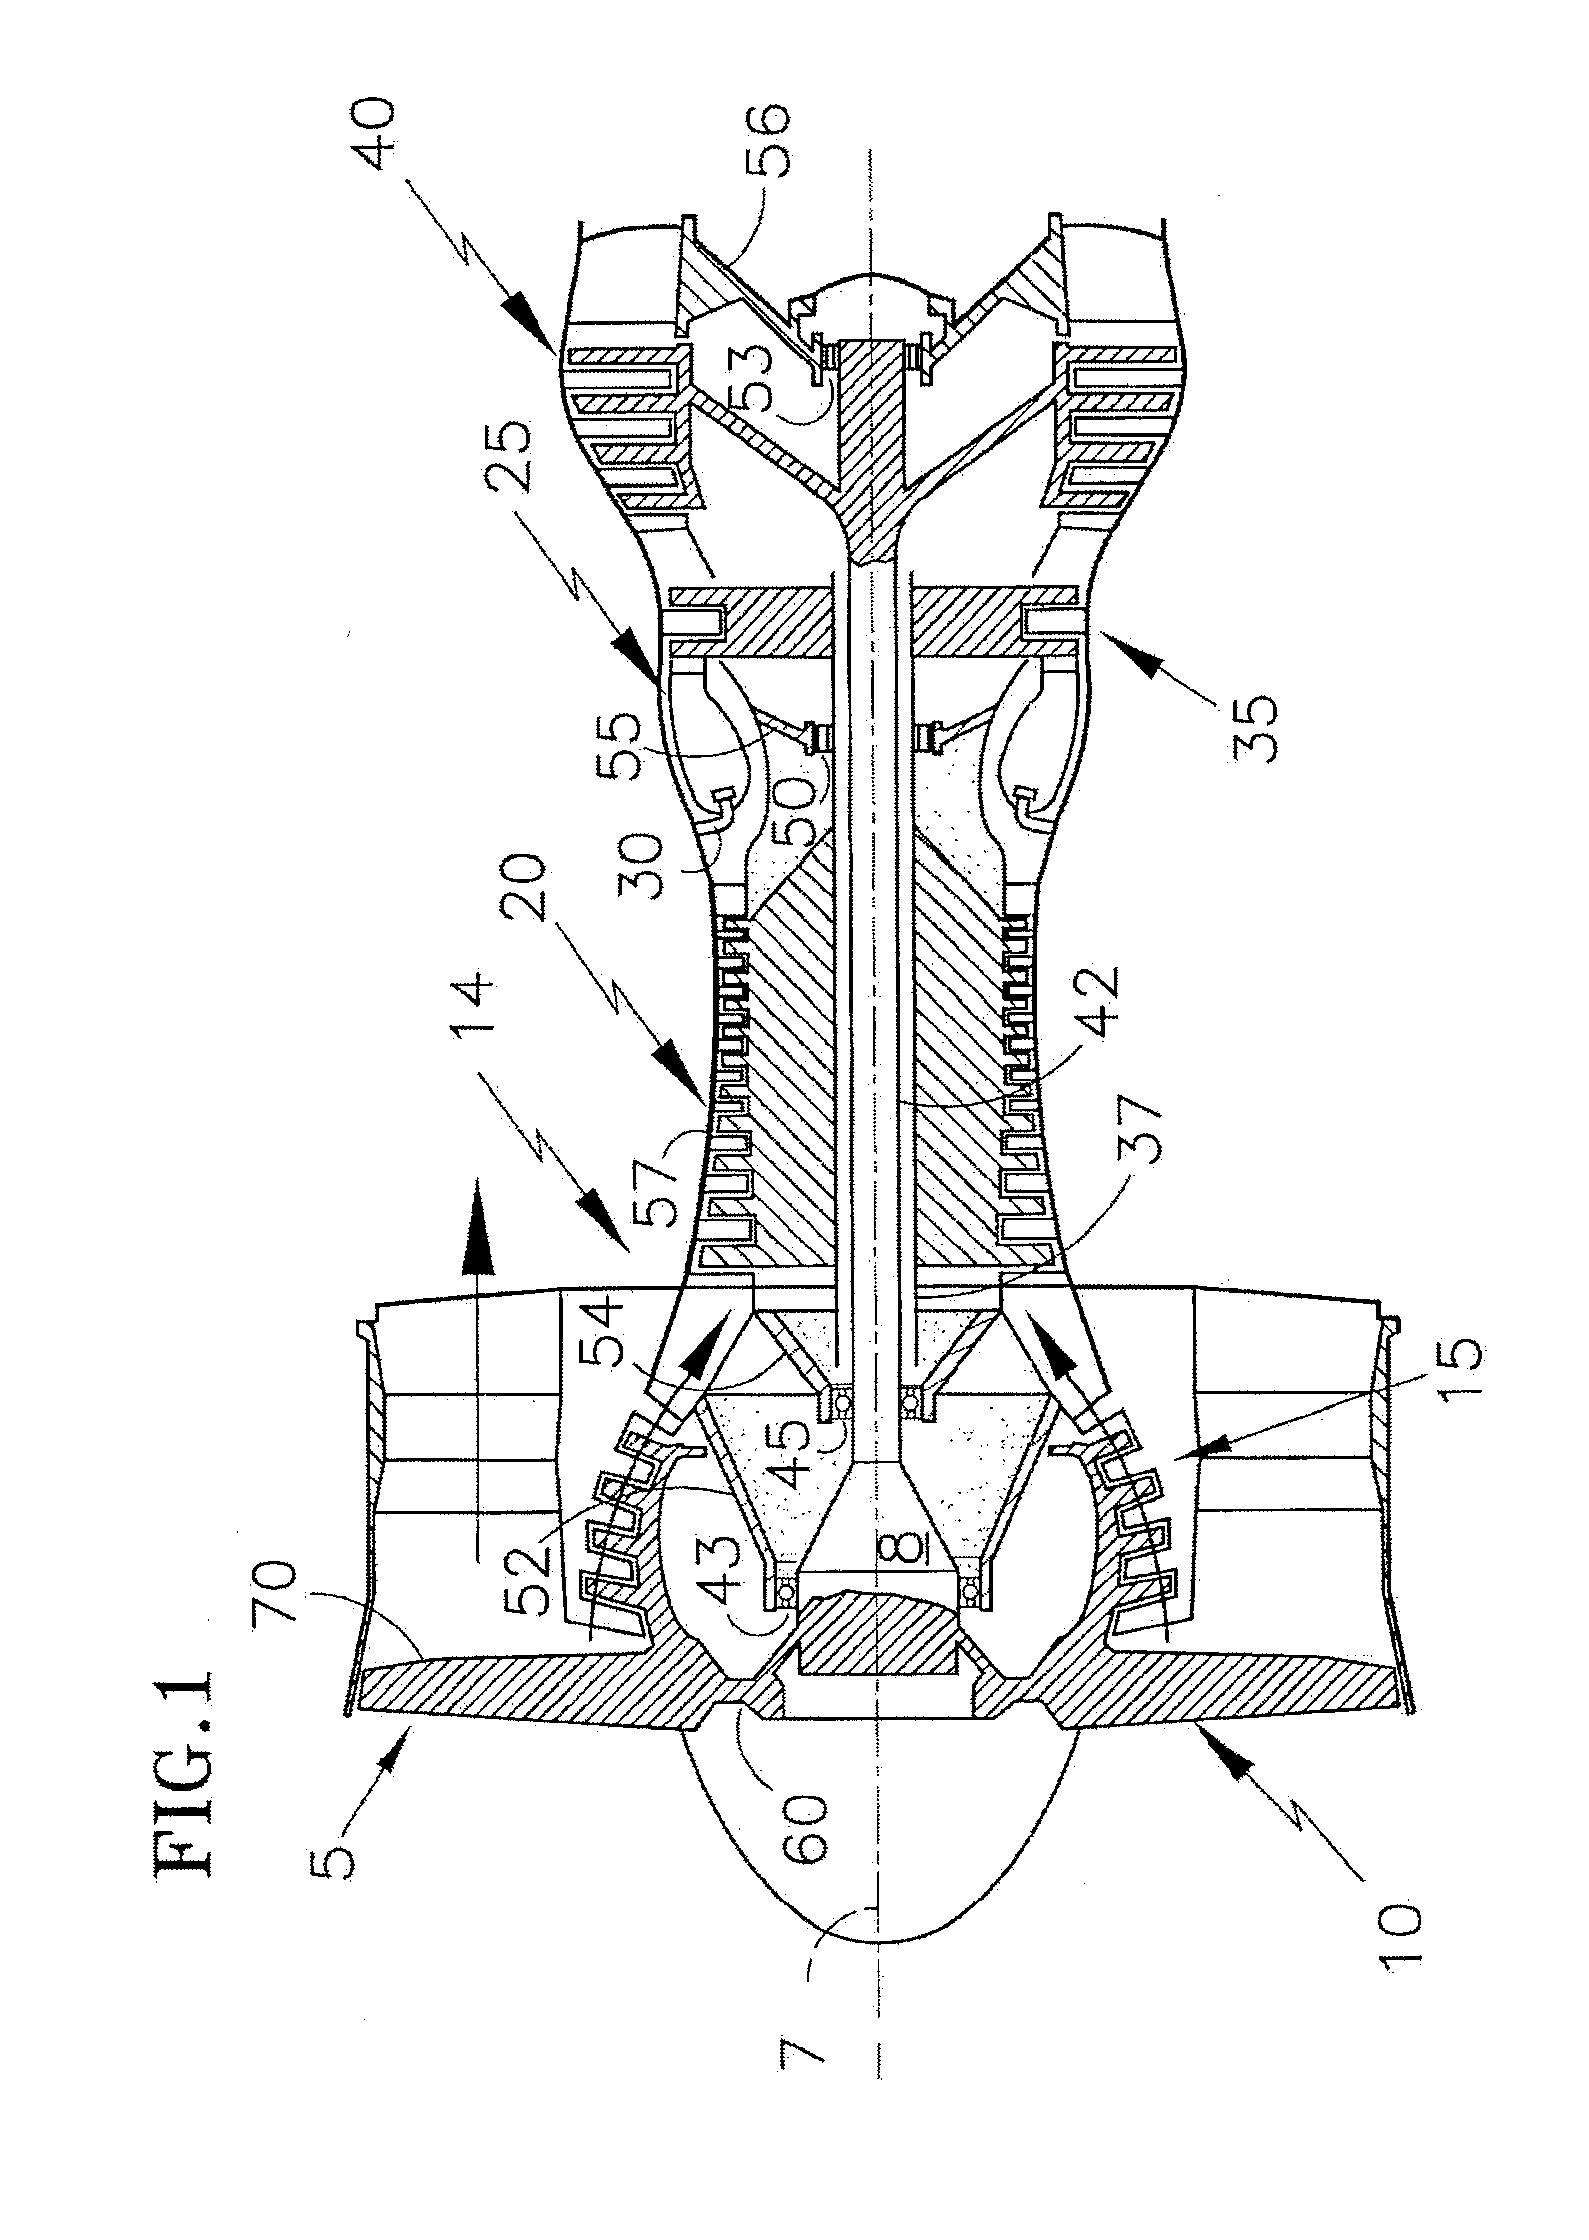 Gas turbine engine blade mounting arrangement